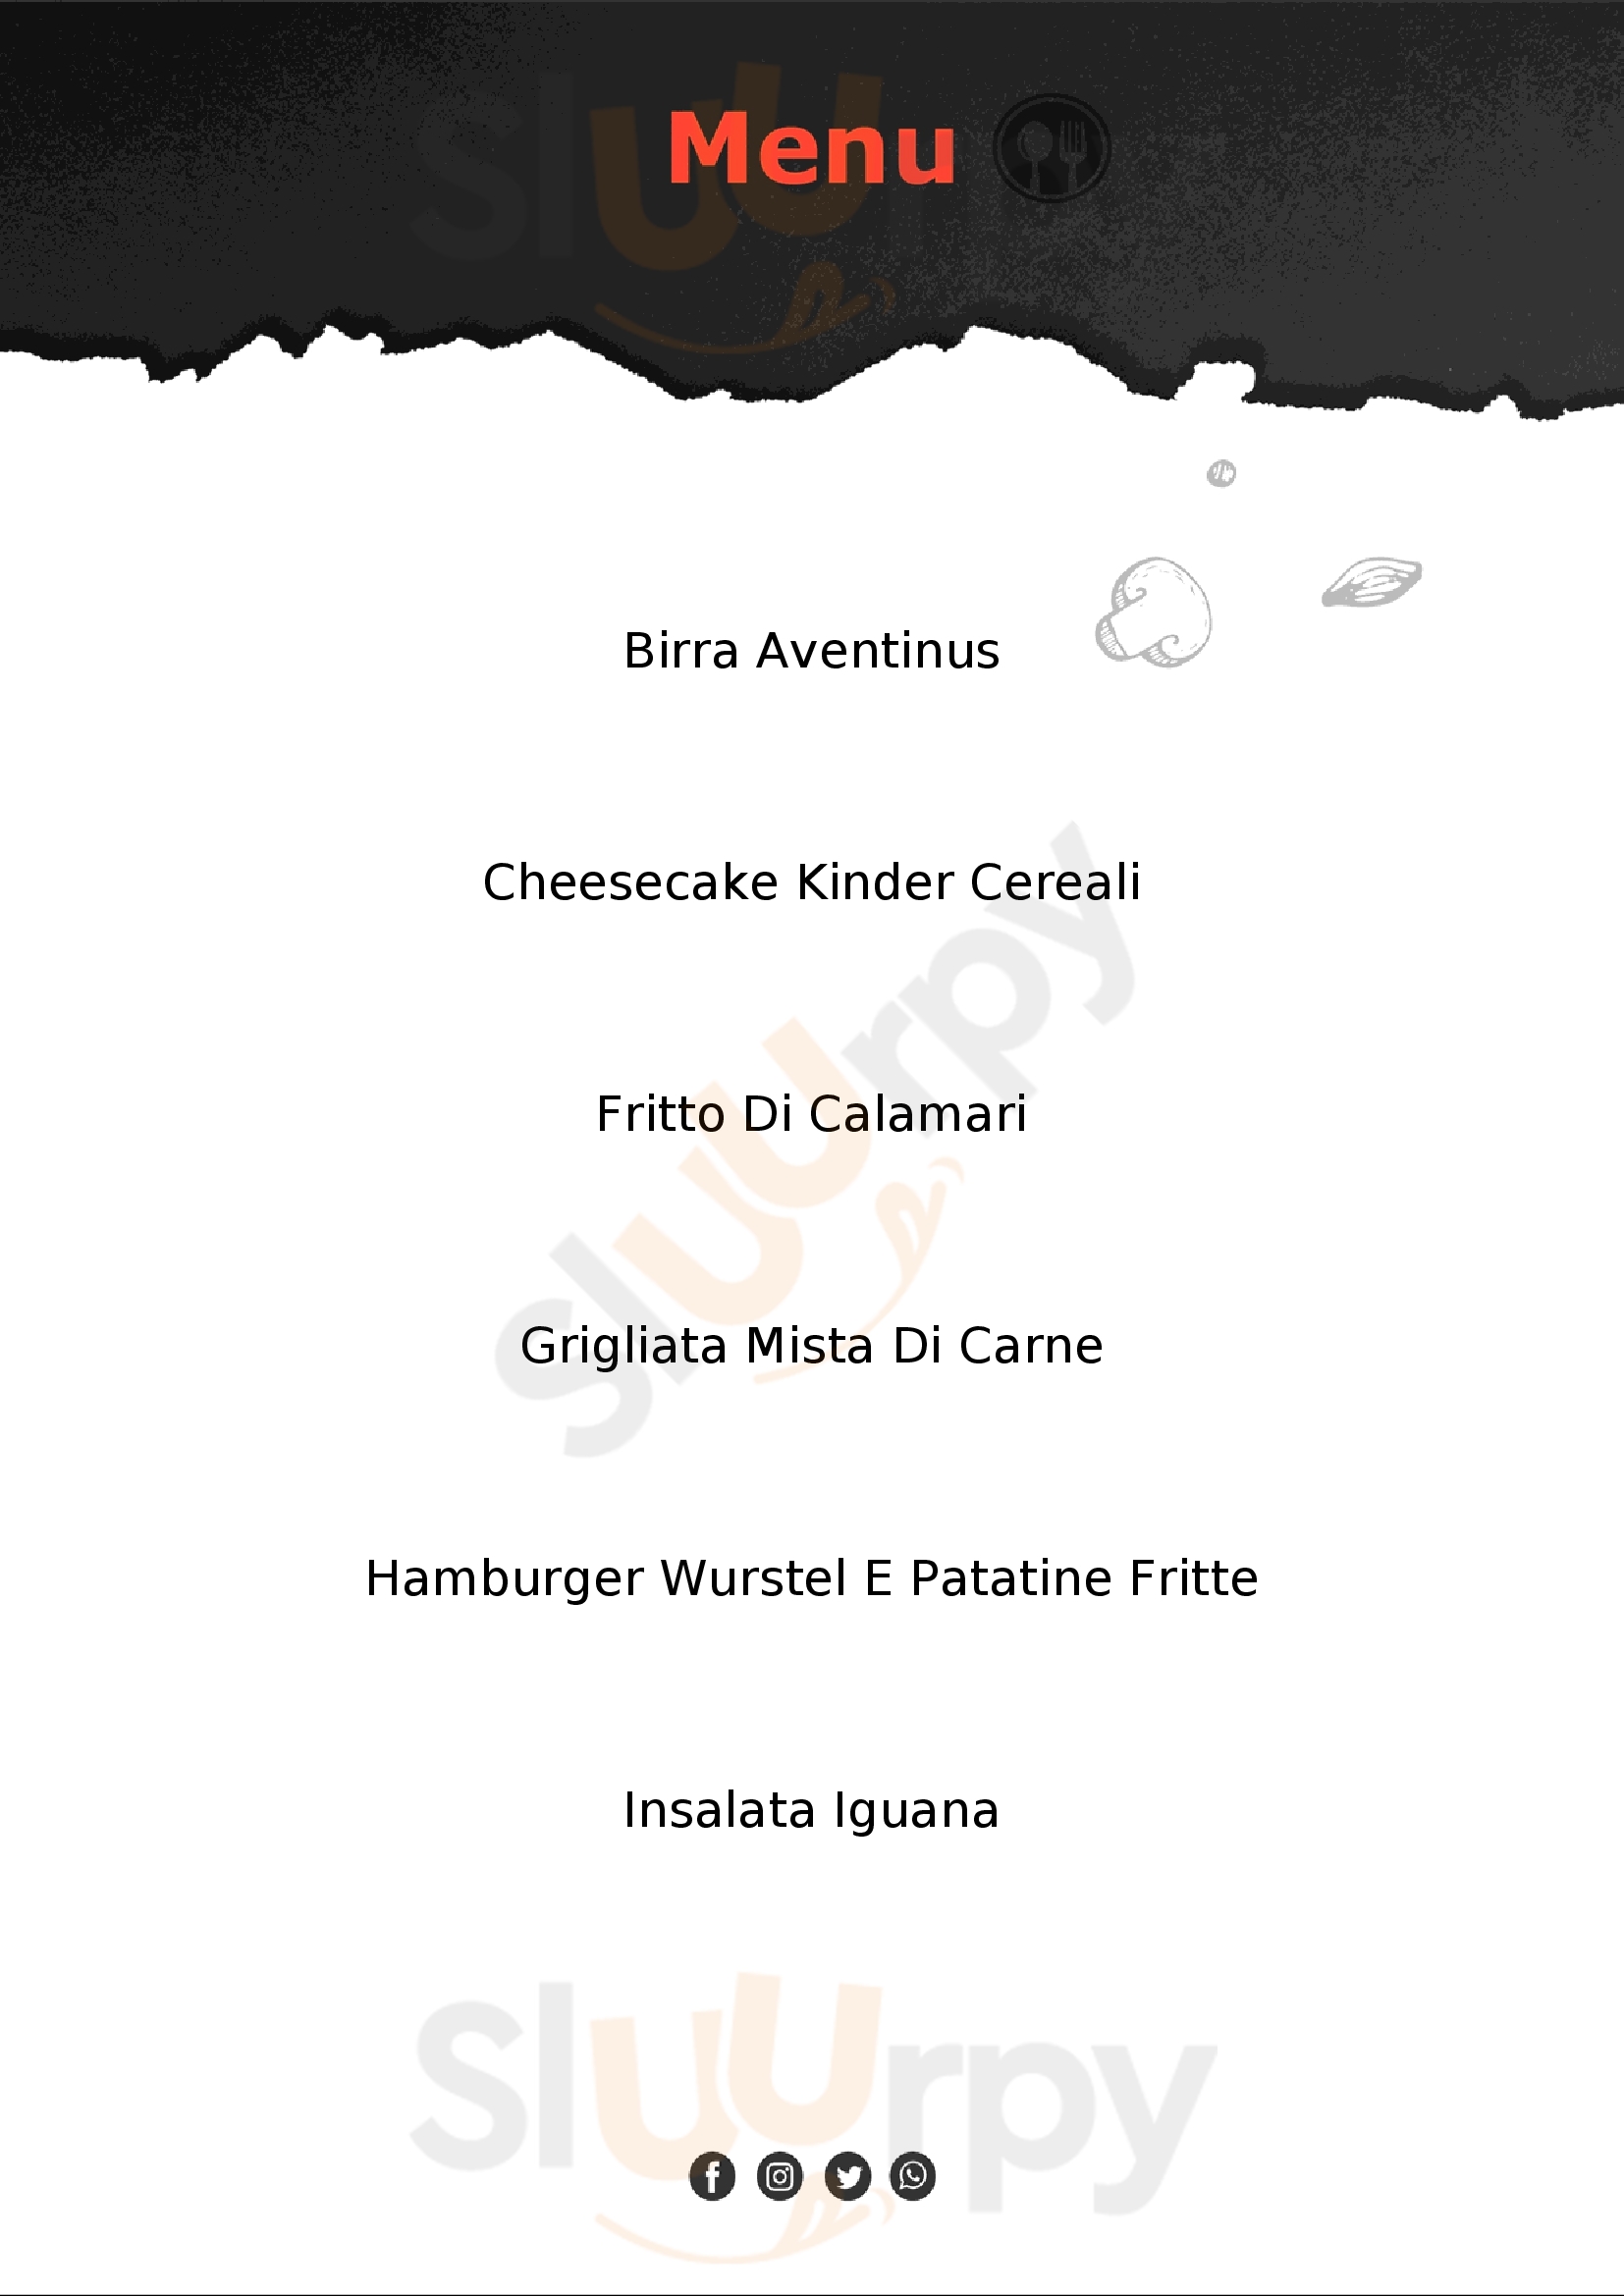 Birreria Brasserie Iguana Pietra Ligure menù 1 pagina